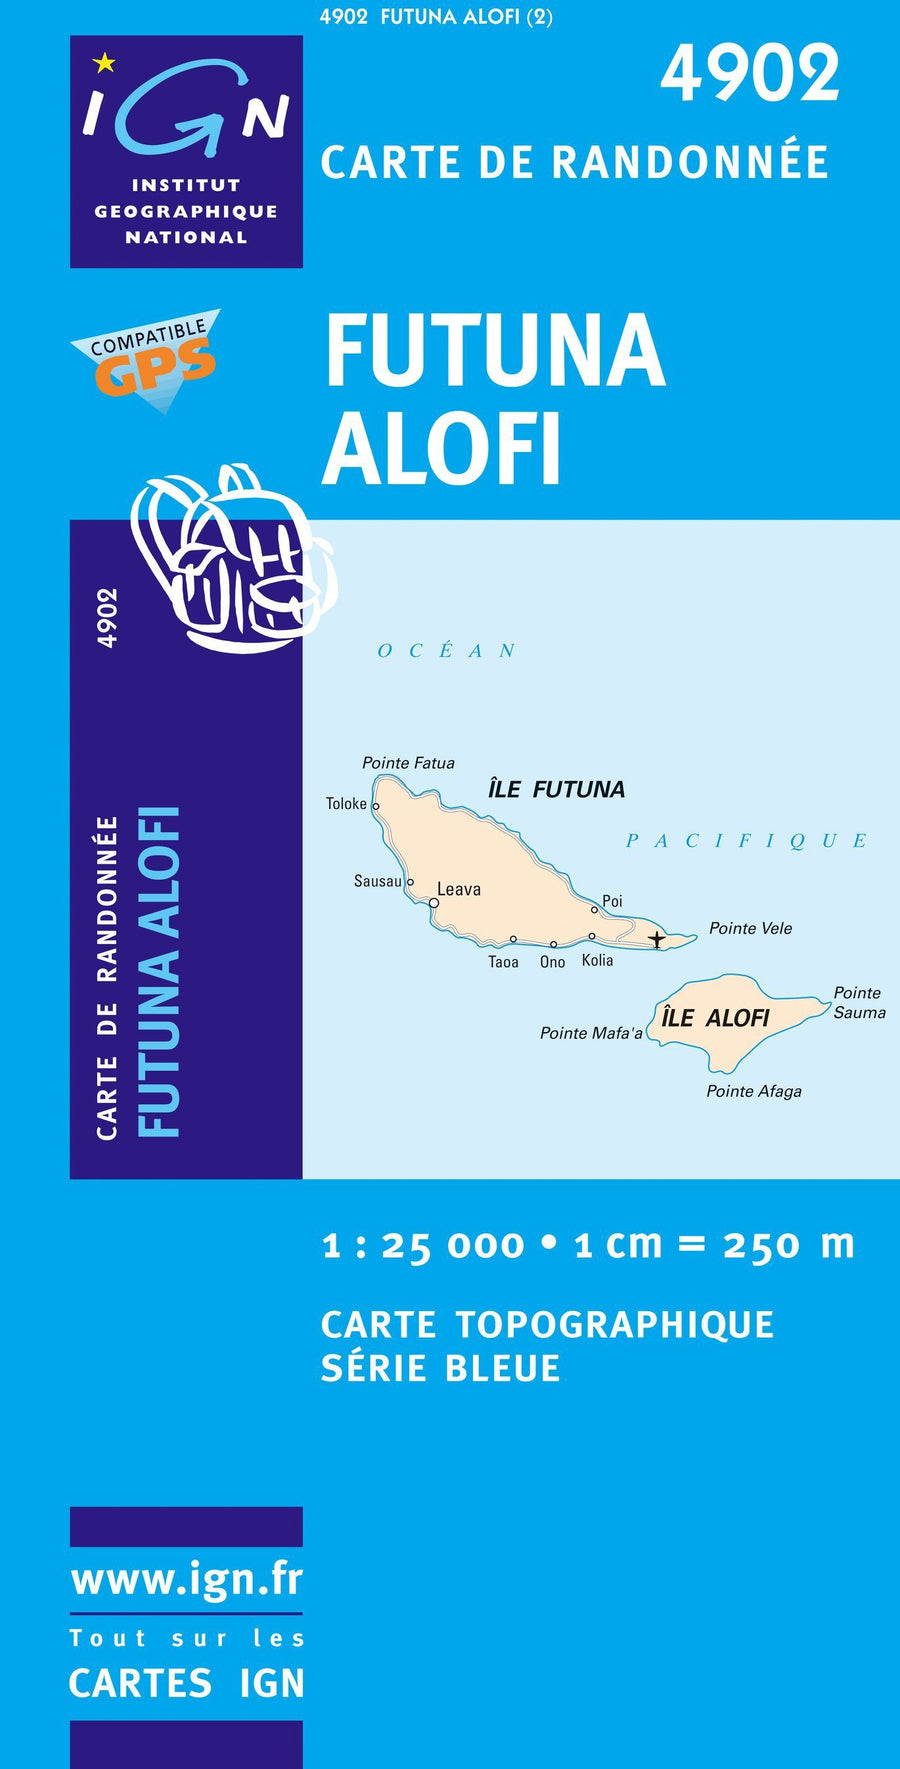 Carte de randonnée n° 4902 - Futuna et Alofi (Polynésie Française) | IGN - Série Bleue carte pliée IGN 